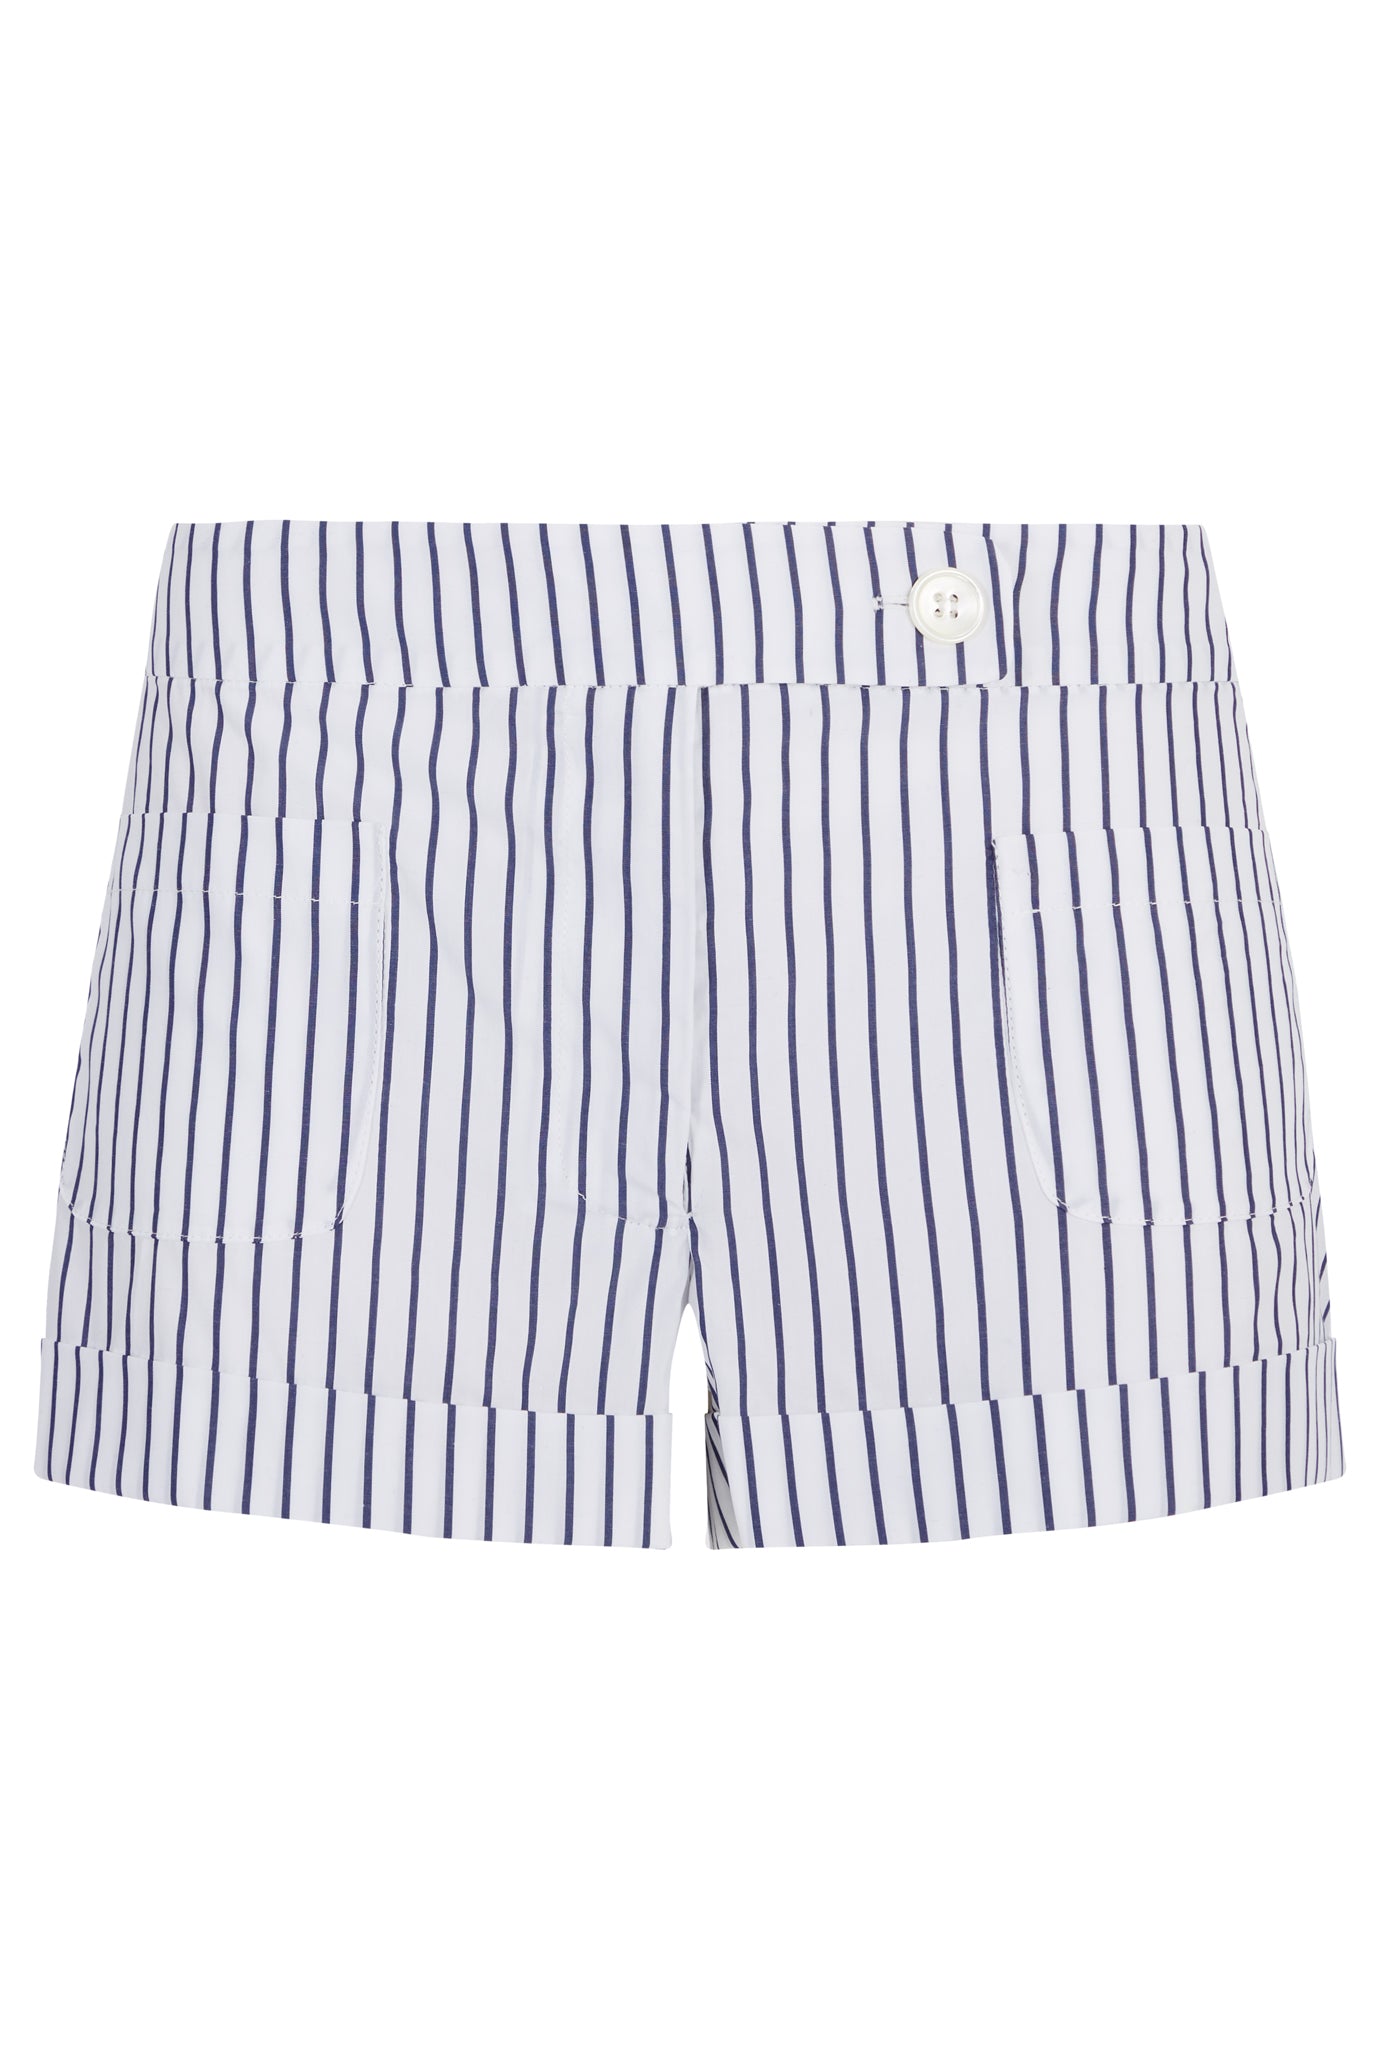 womens blue striped shorts